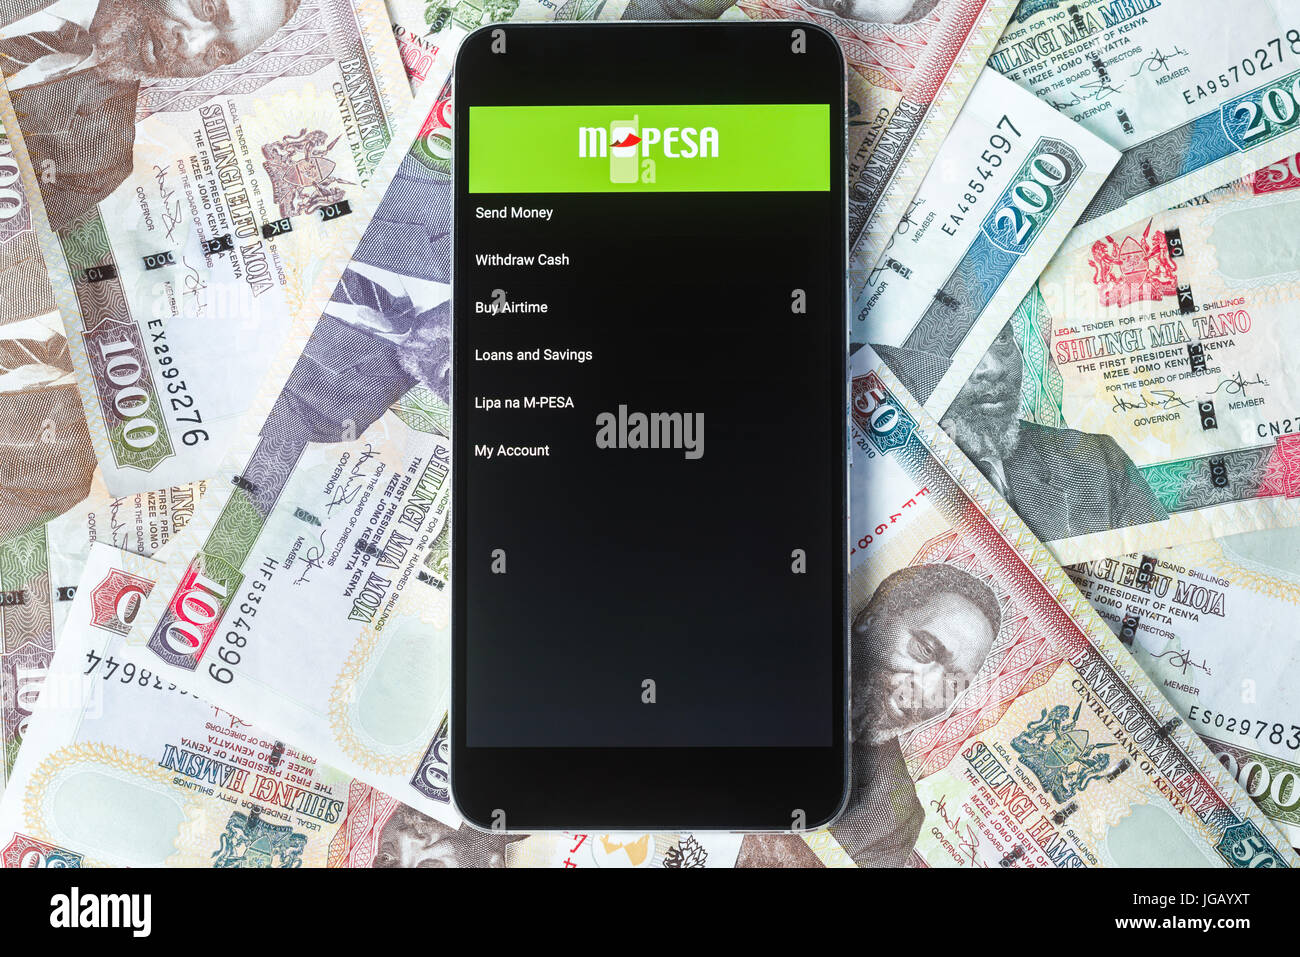 Safaricom M-Pesa fintech microfinance money transaction service on phone with Kenyan Shilling bank notes background Stock Photo